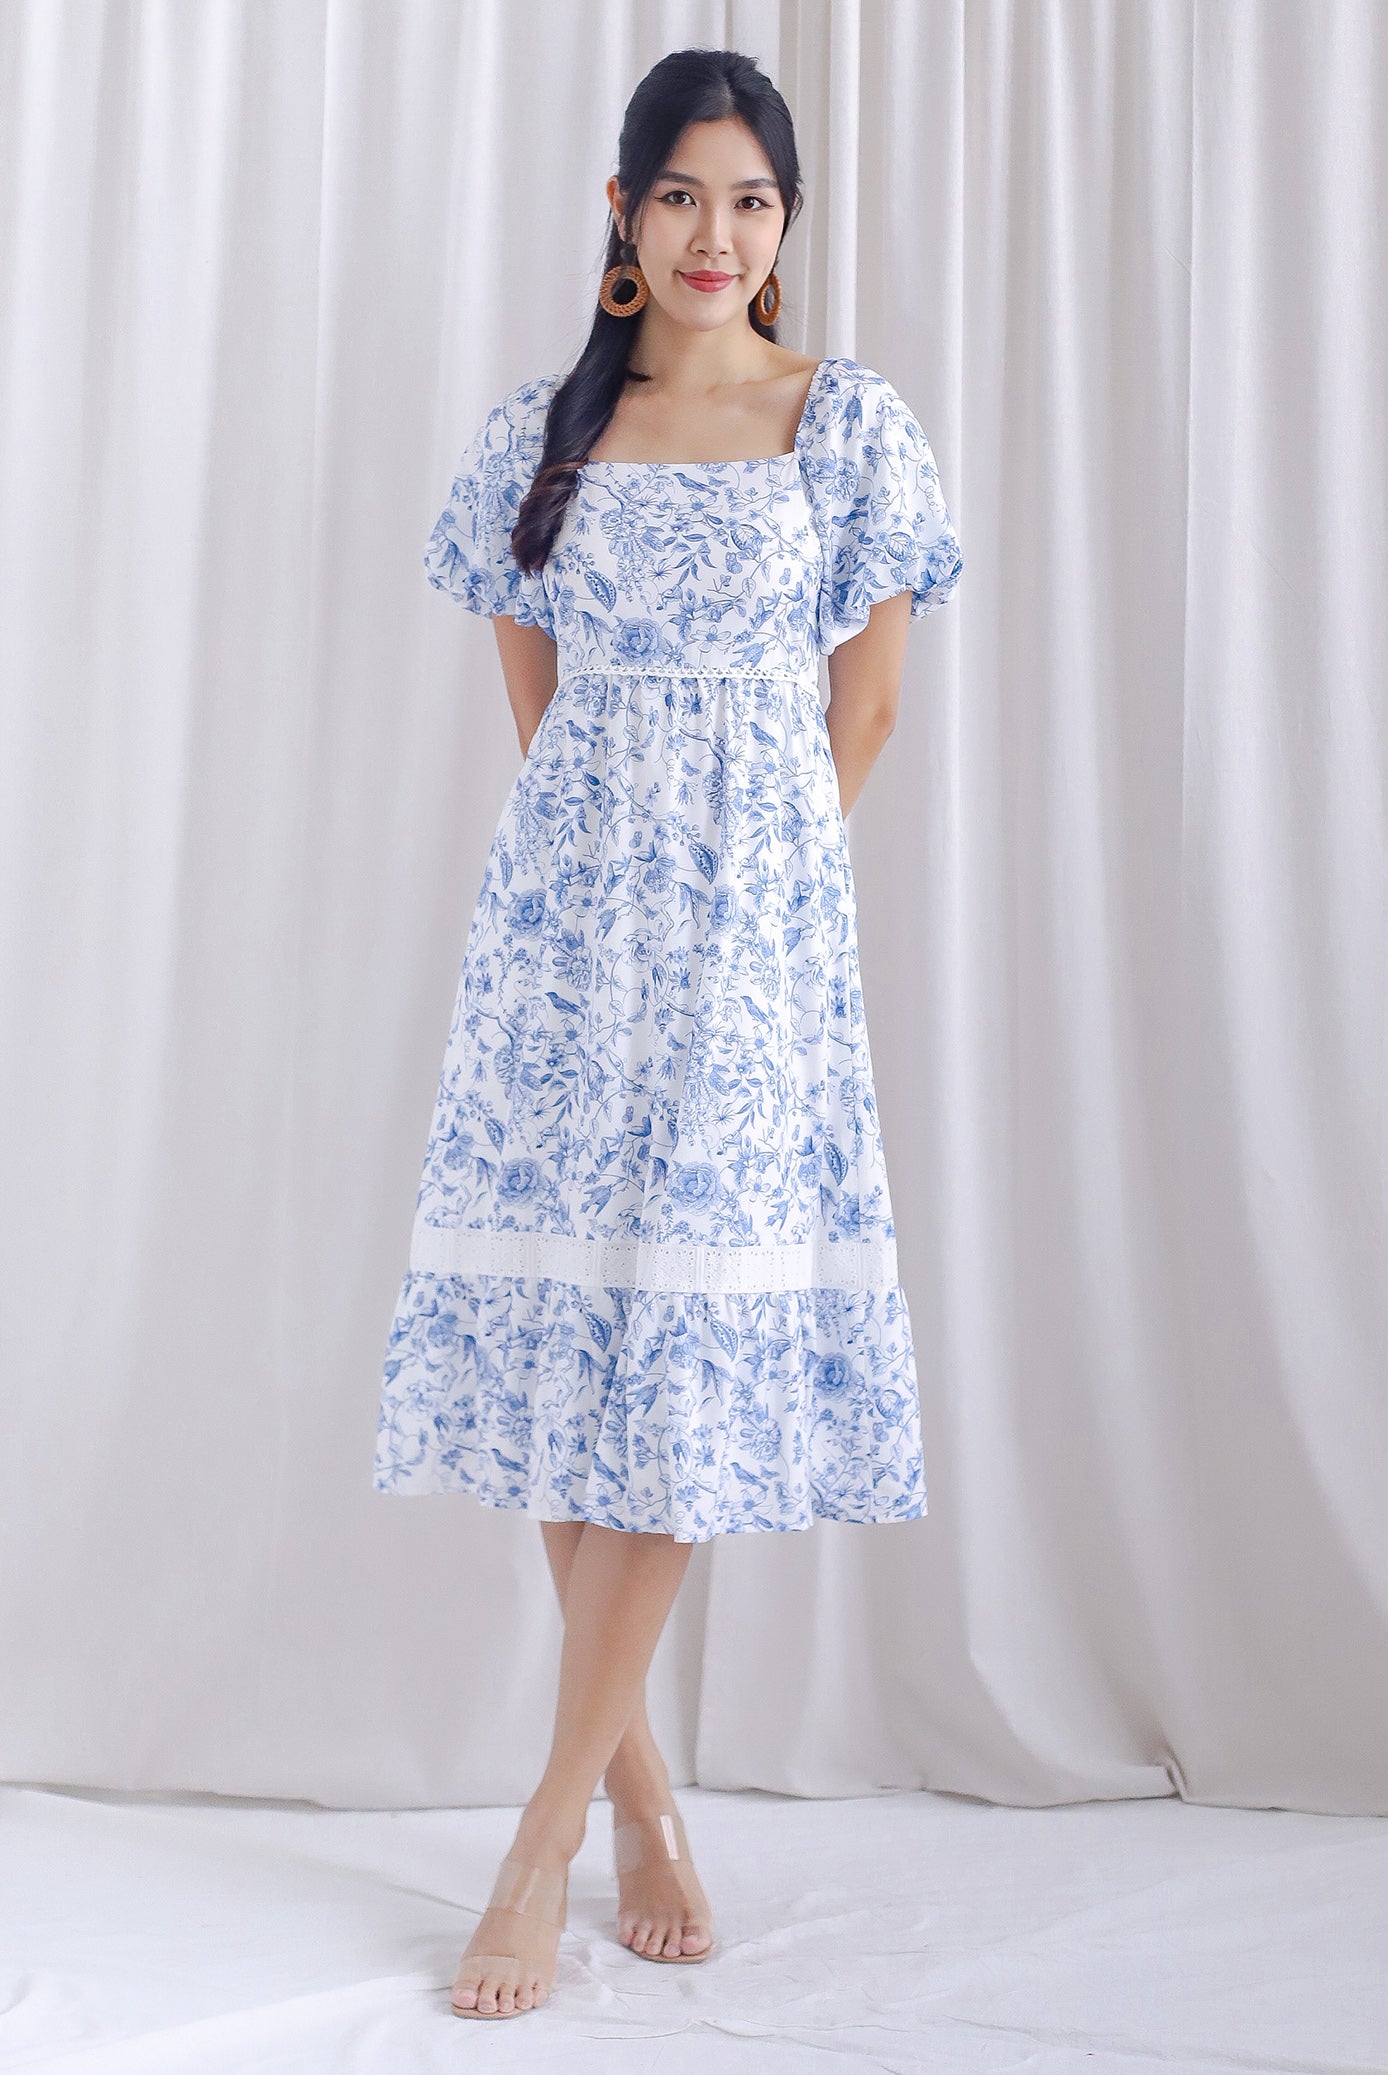 Laurice Porelain Lattice Insert Puffy Sleeve Midi Dress In White/Blue